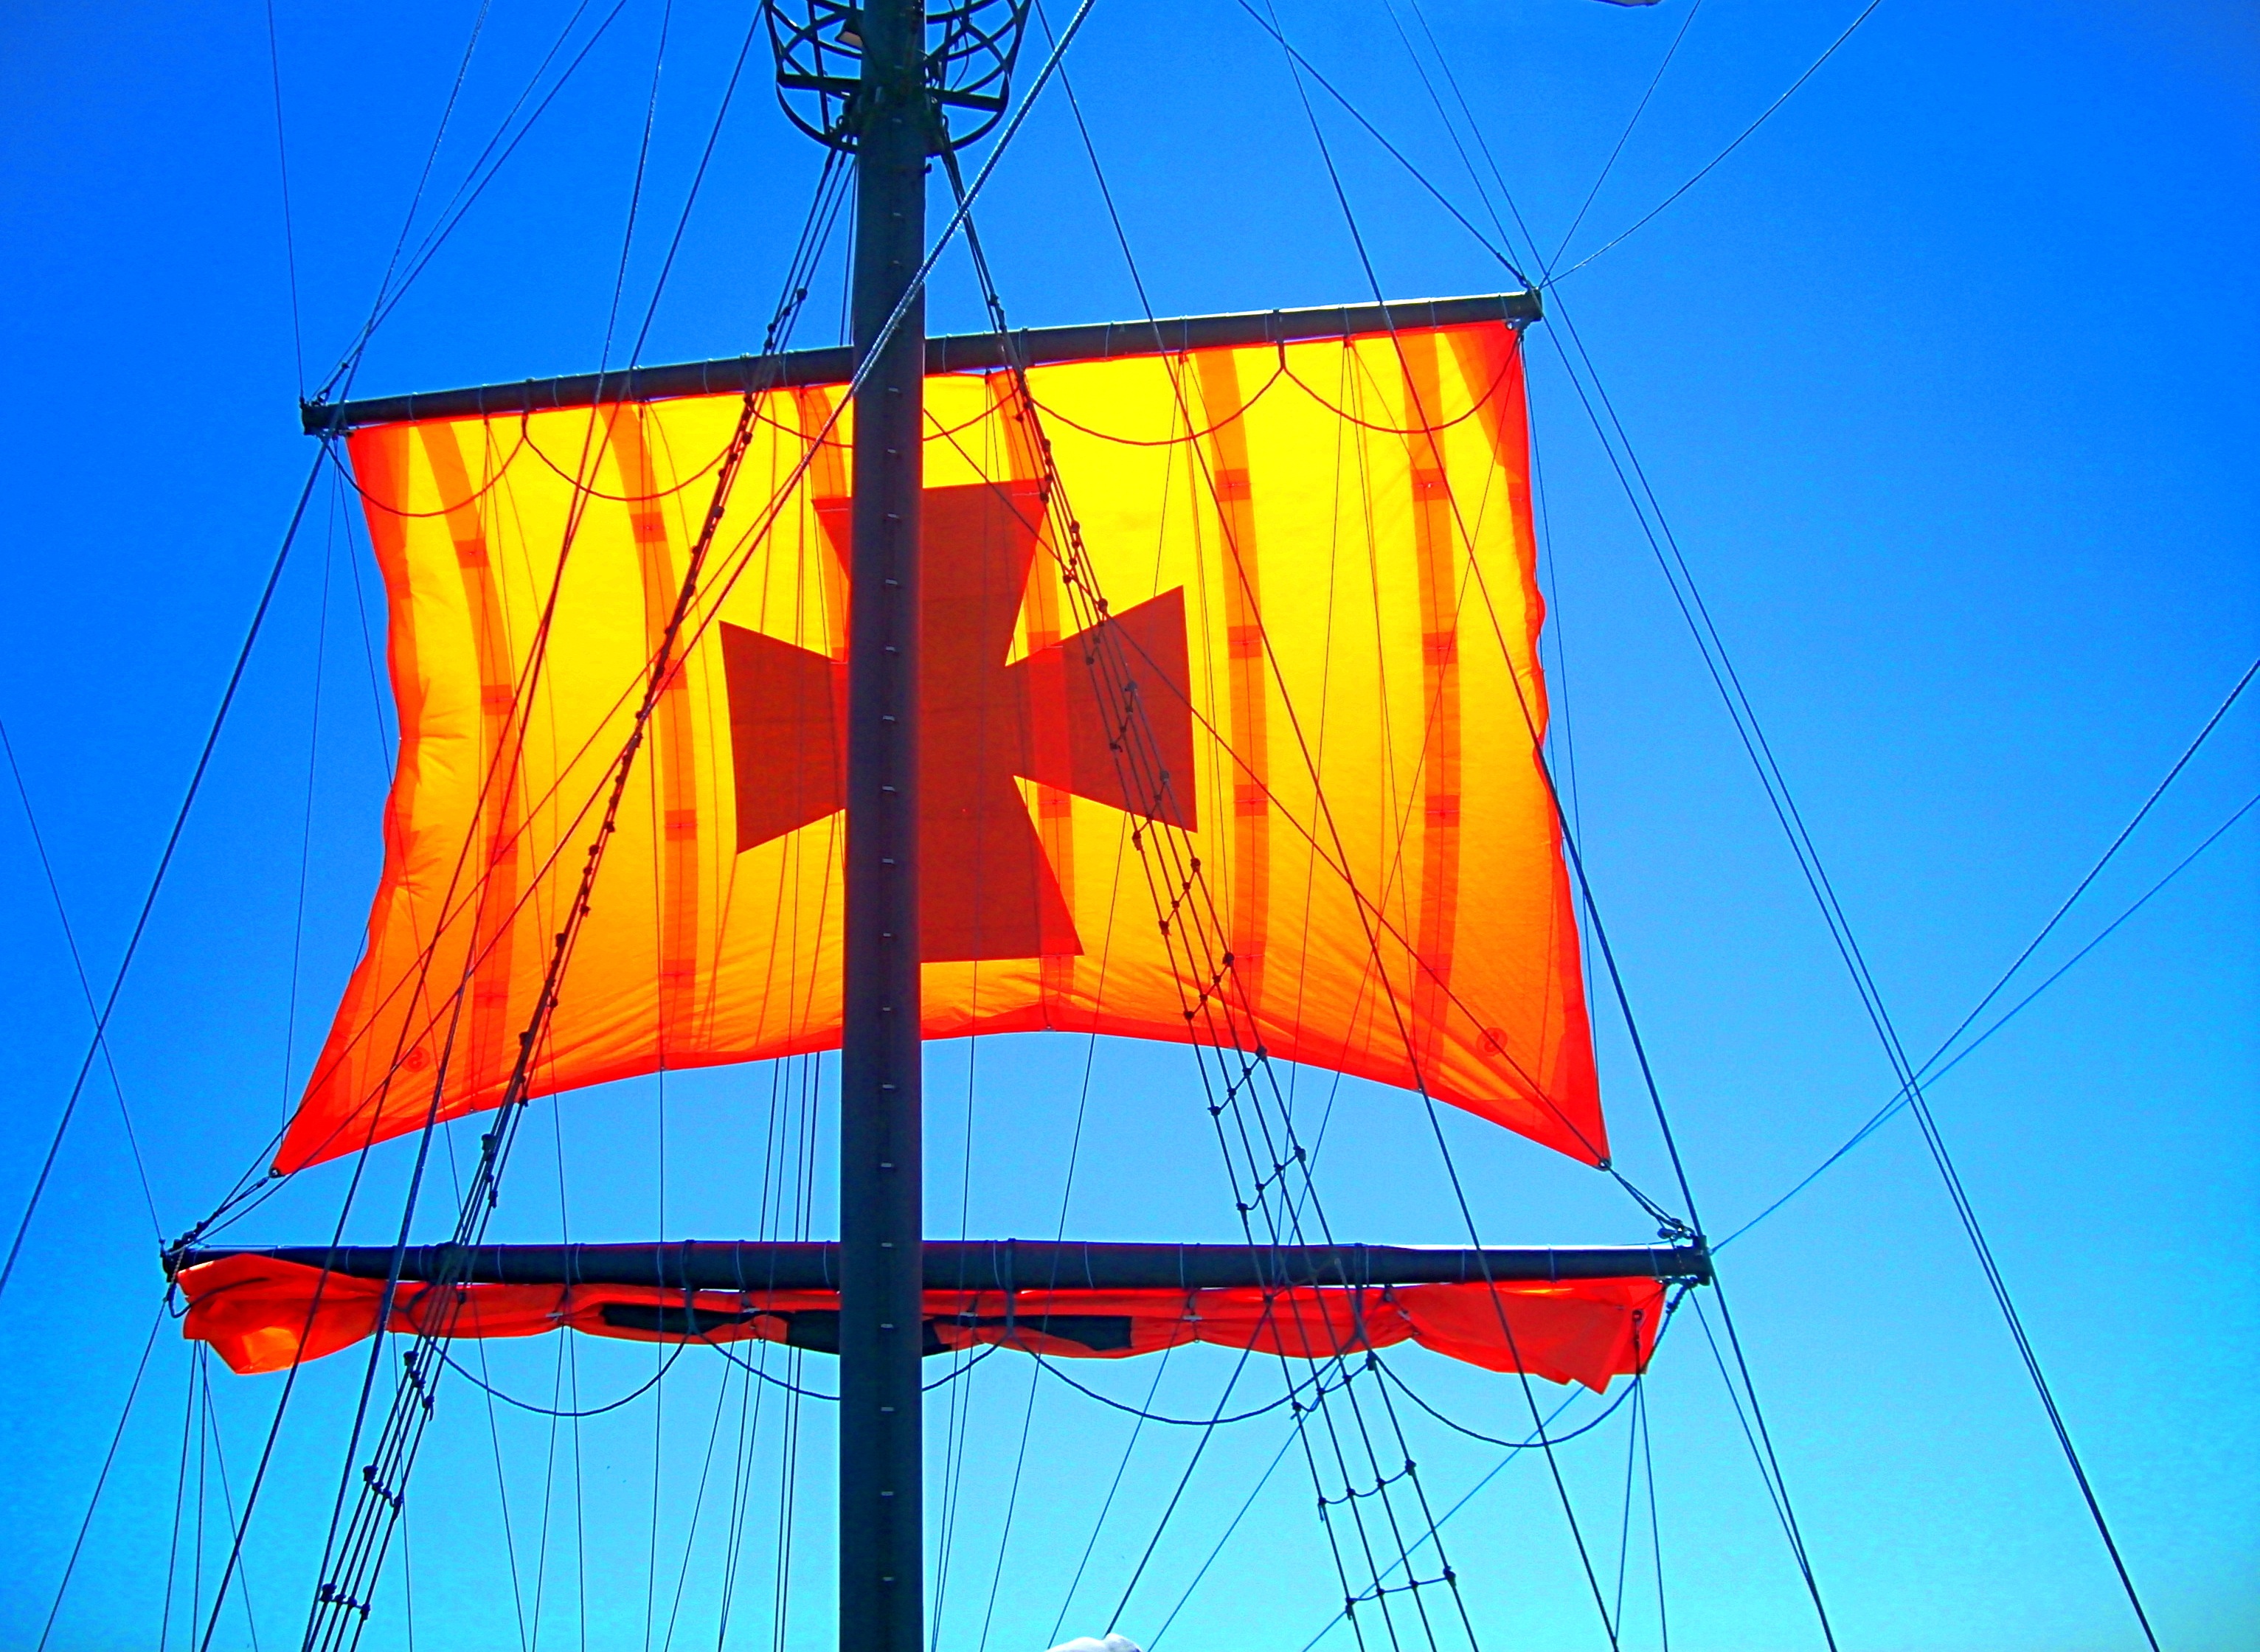 Sail Ship Sailing Vessel free image download